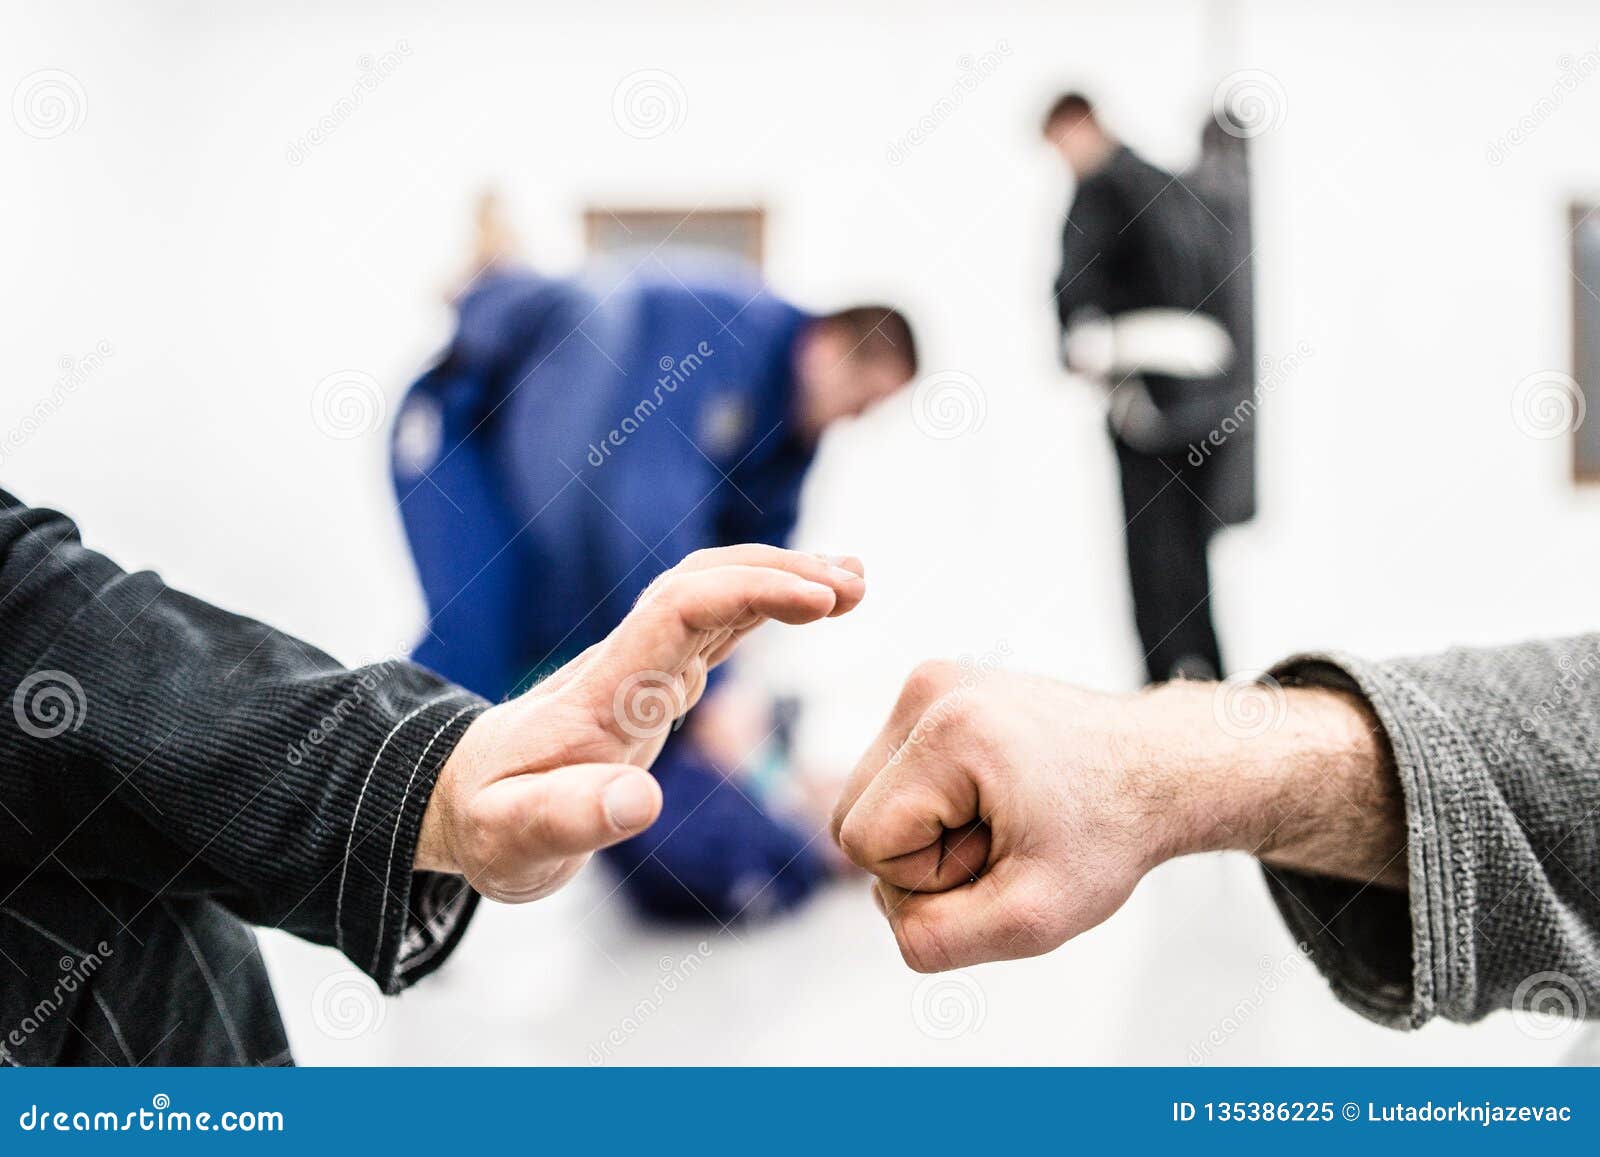 Fist Training